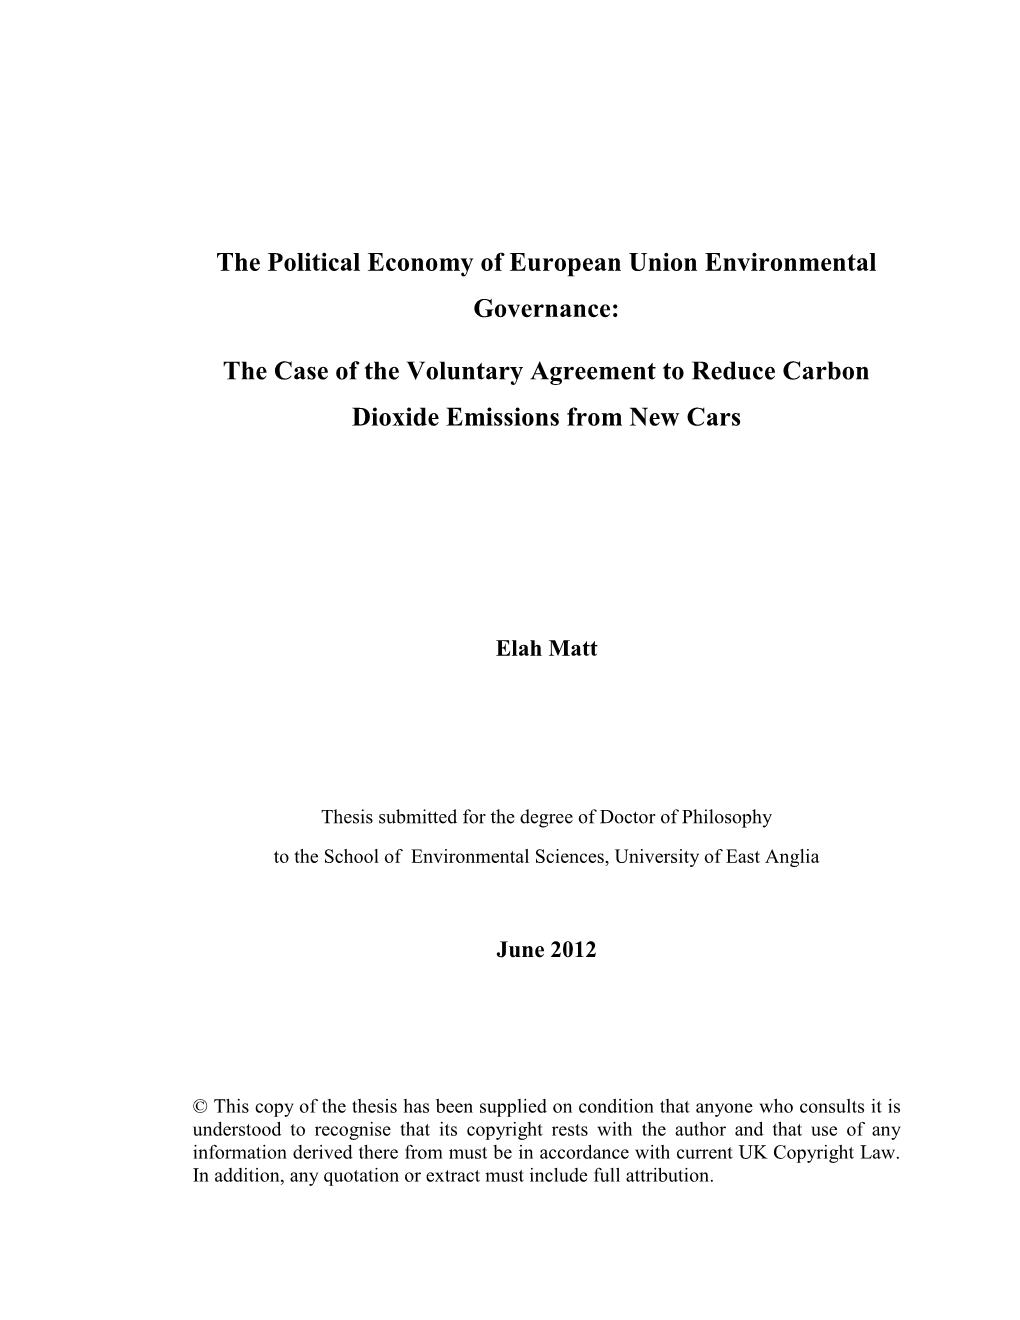 The Political Economy of European Union Environmental Governance